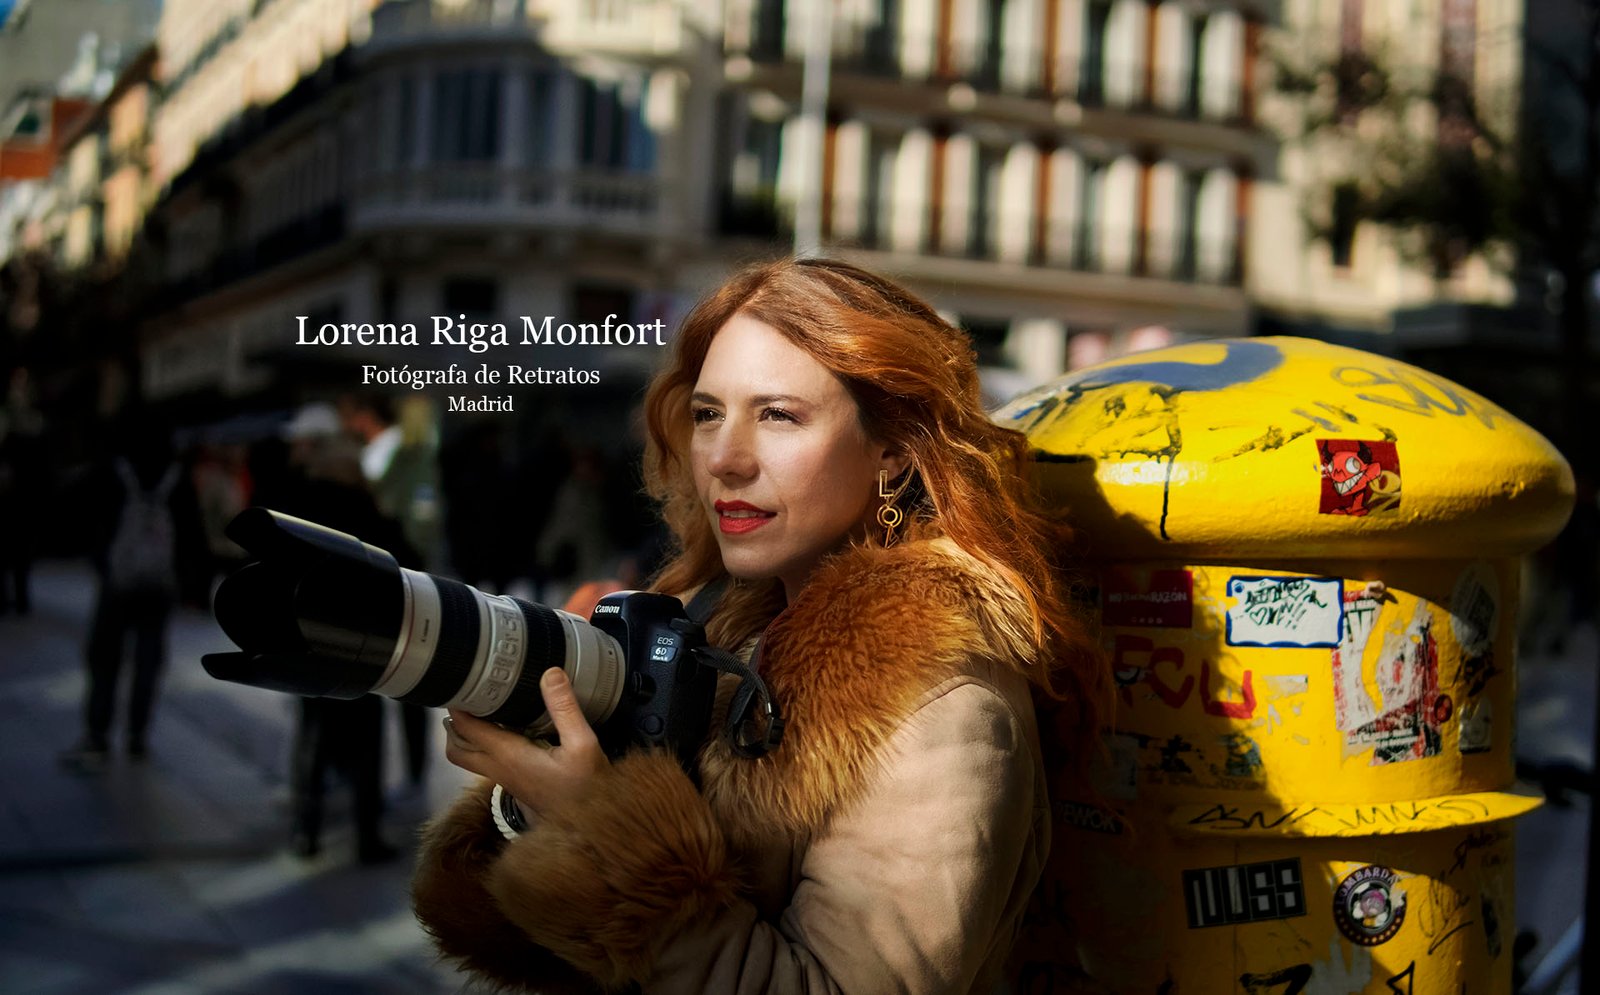 fotografa de retratos madrid, lorena riga monfort